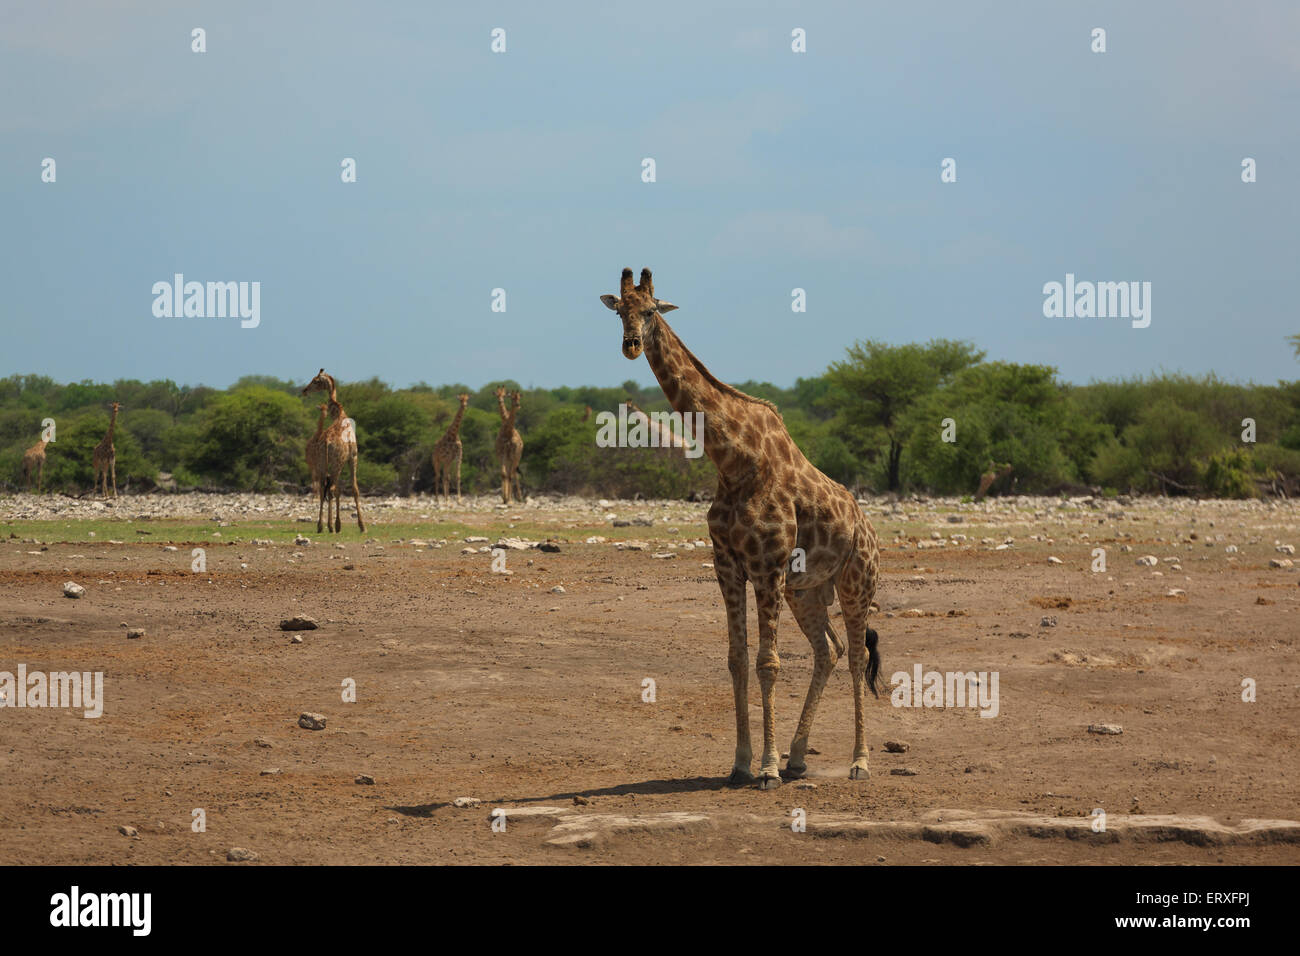 Giraffe from Etosha National Park, Namibia Stock Photo